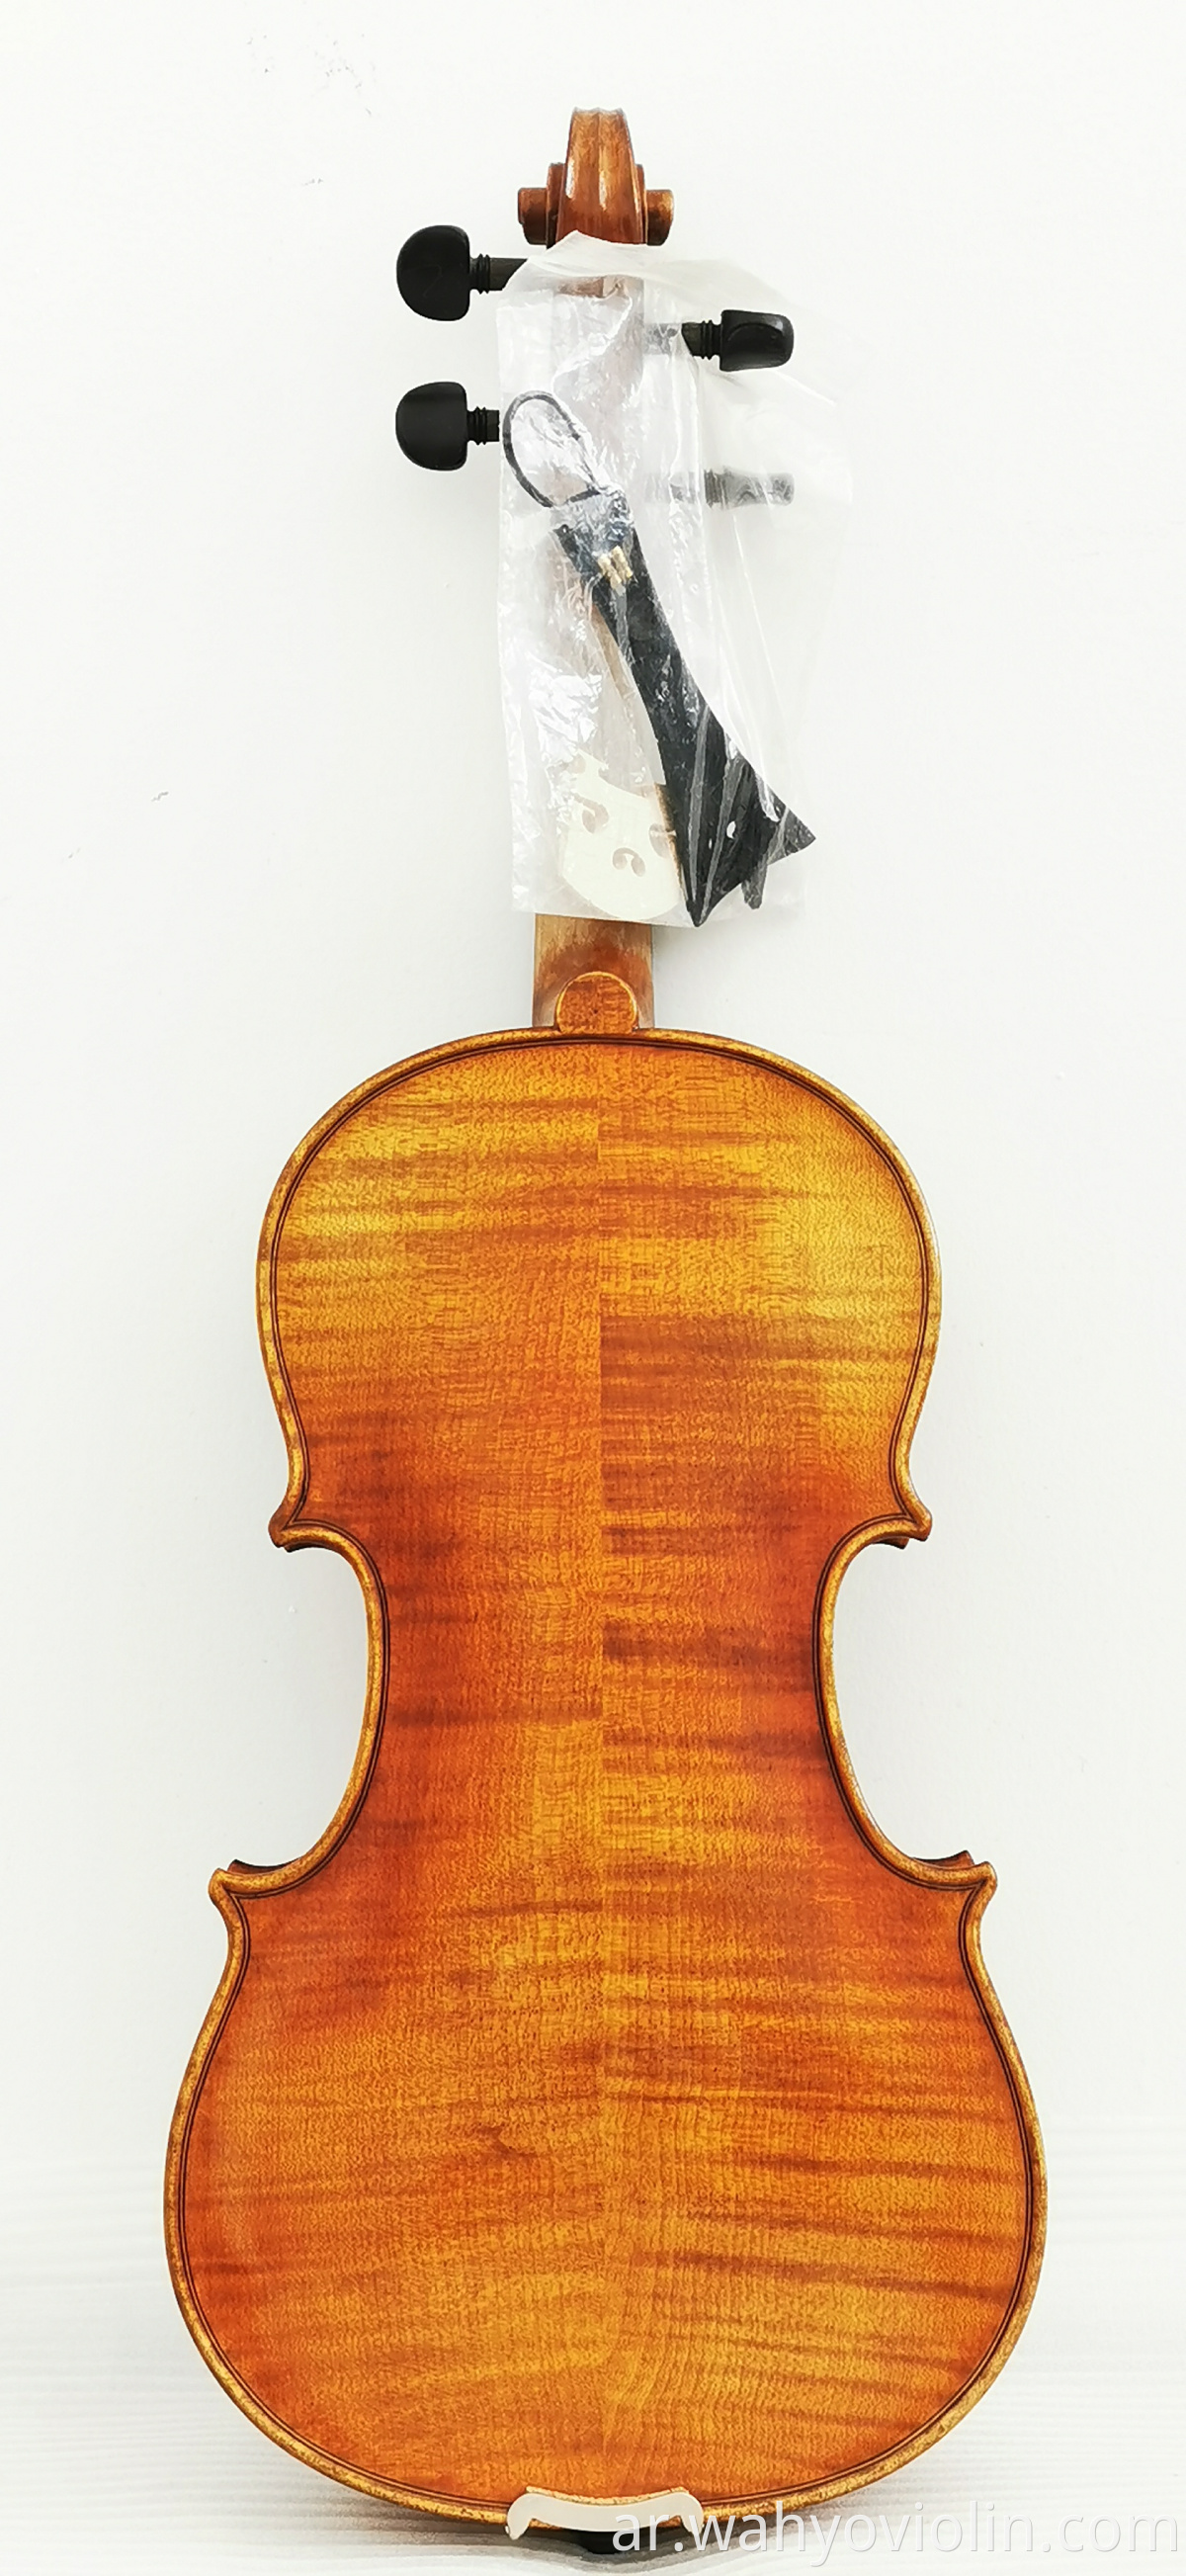 ViolinB JM-VAB-6-2